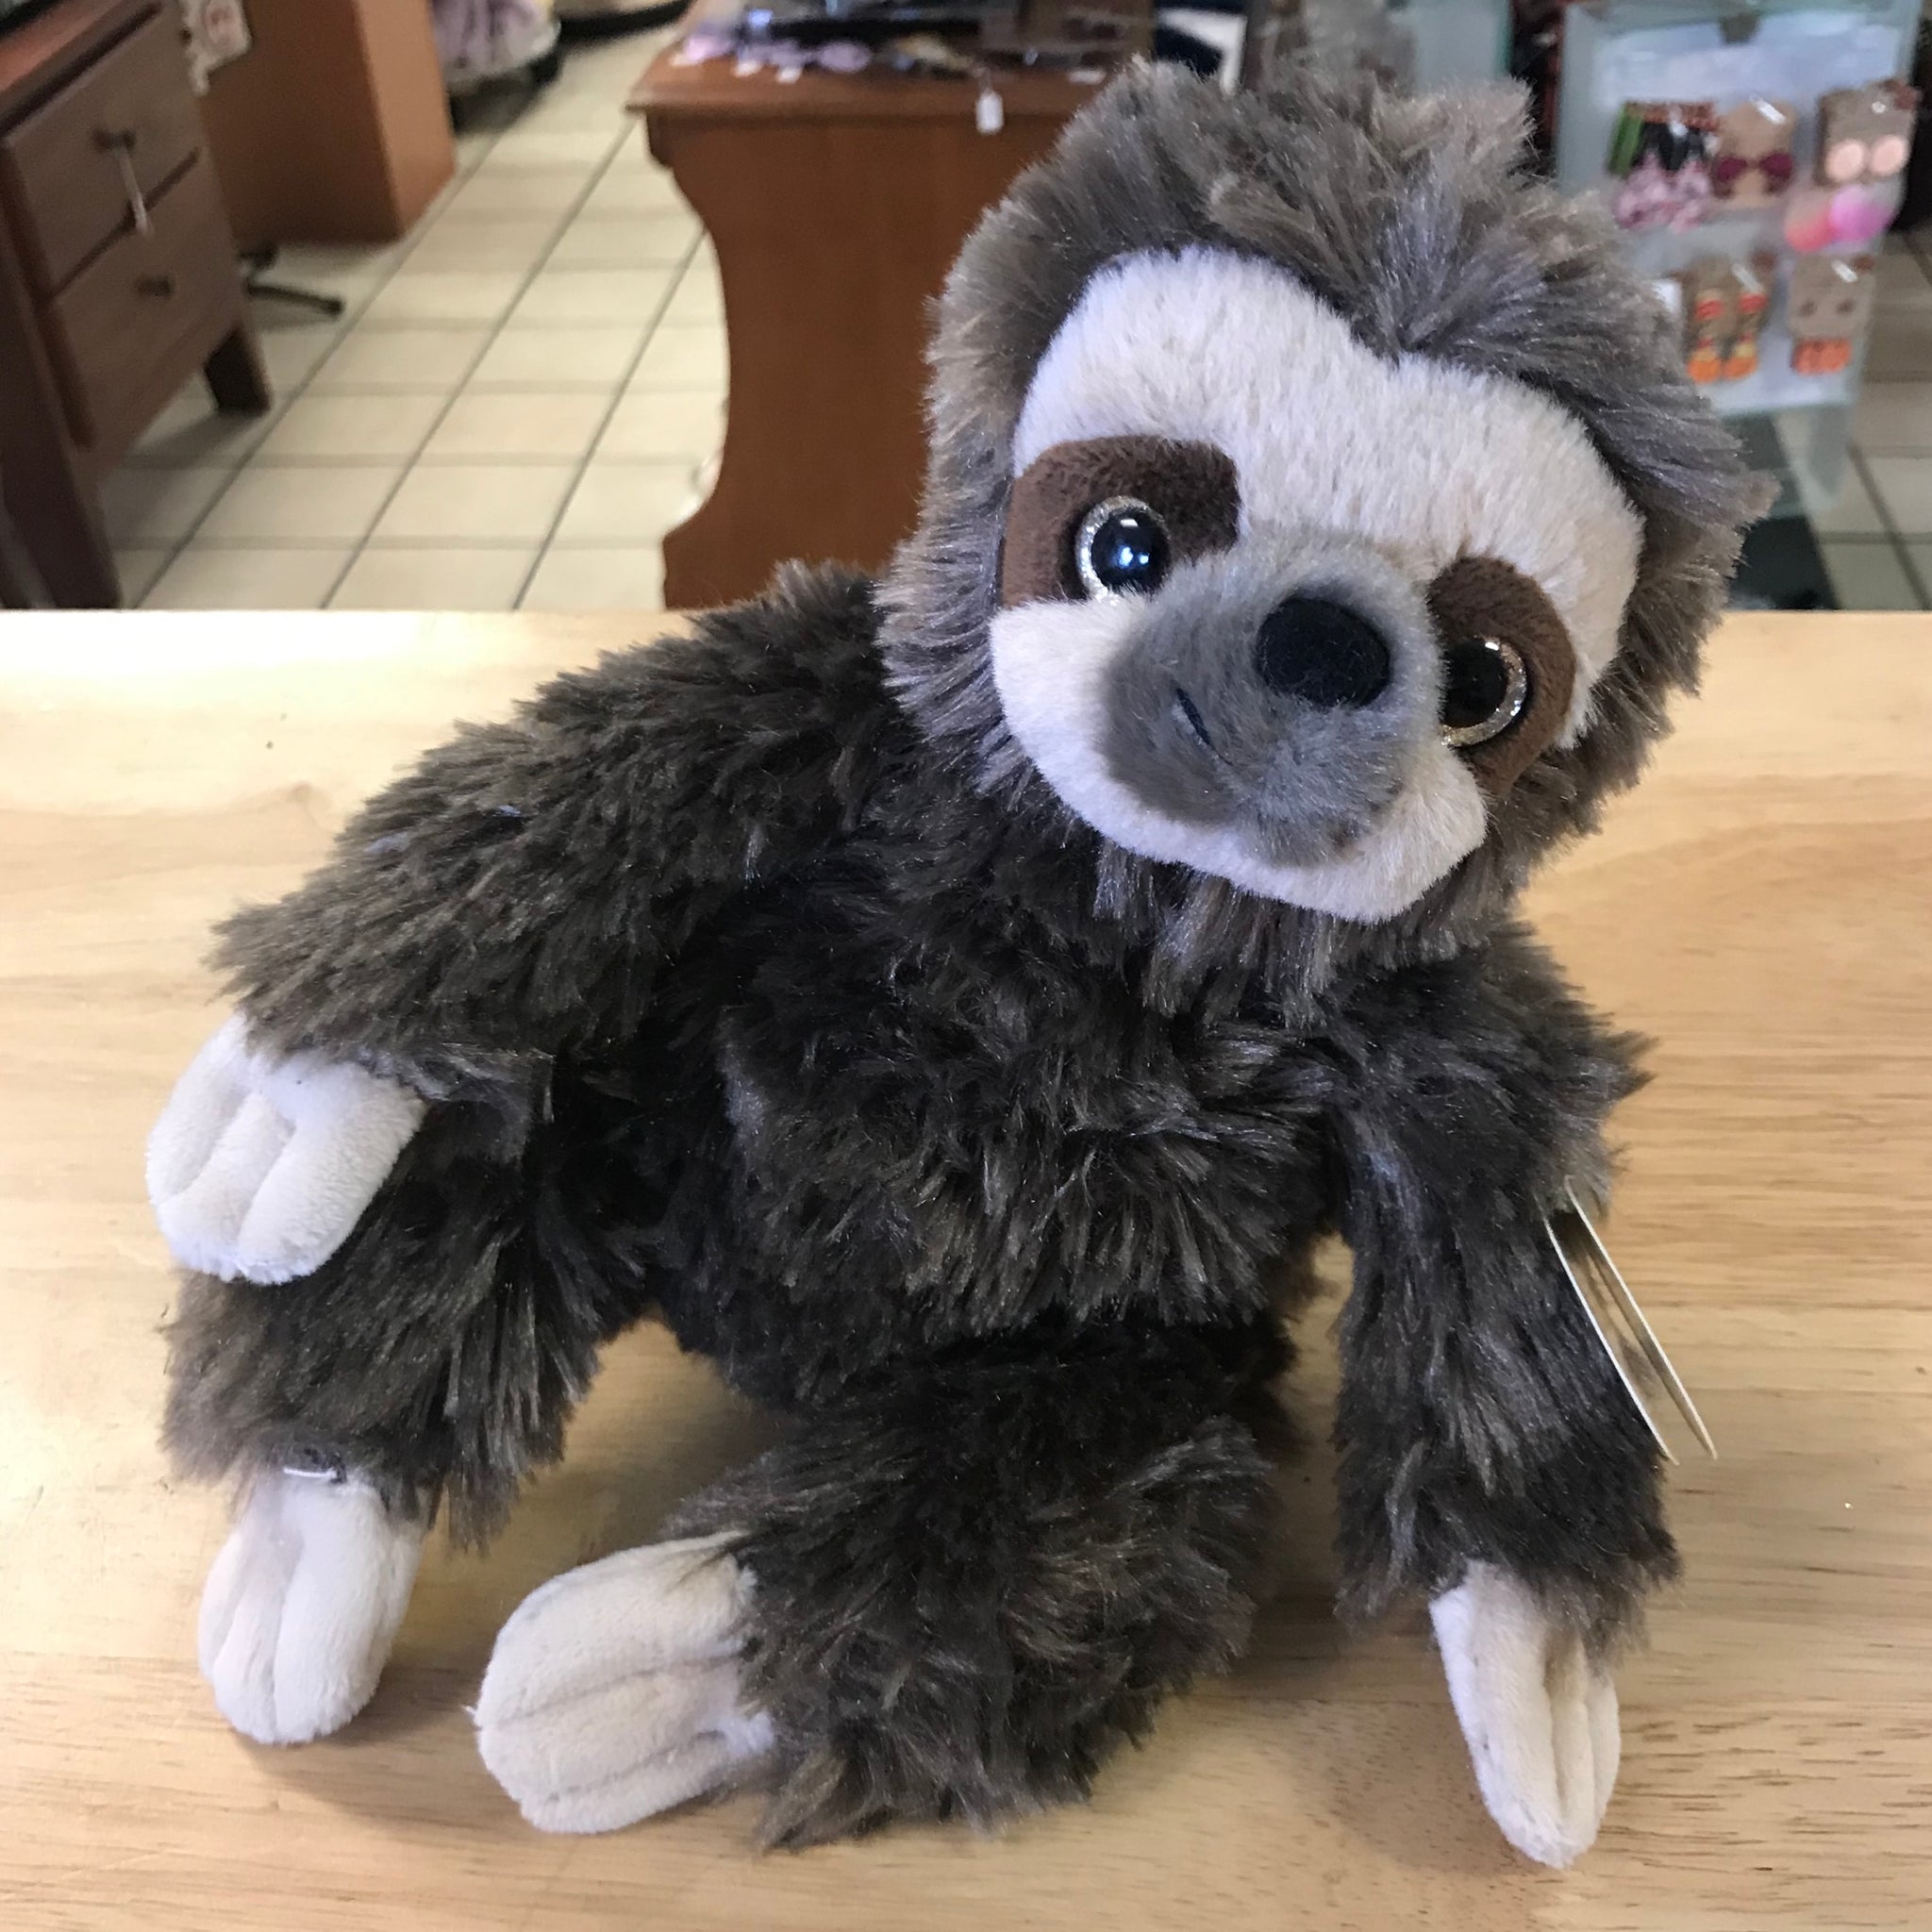  Bearington Lil' Speedy Small Plush Stuffed Animal